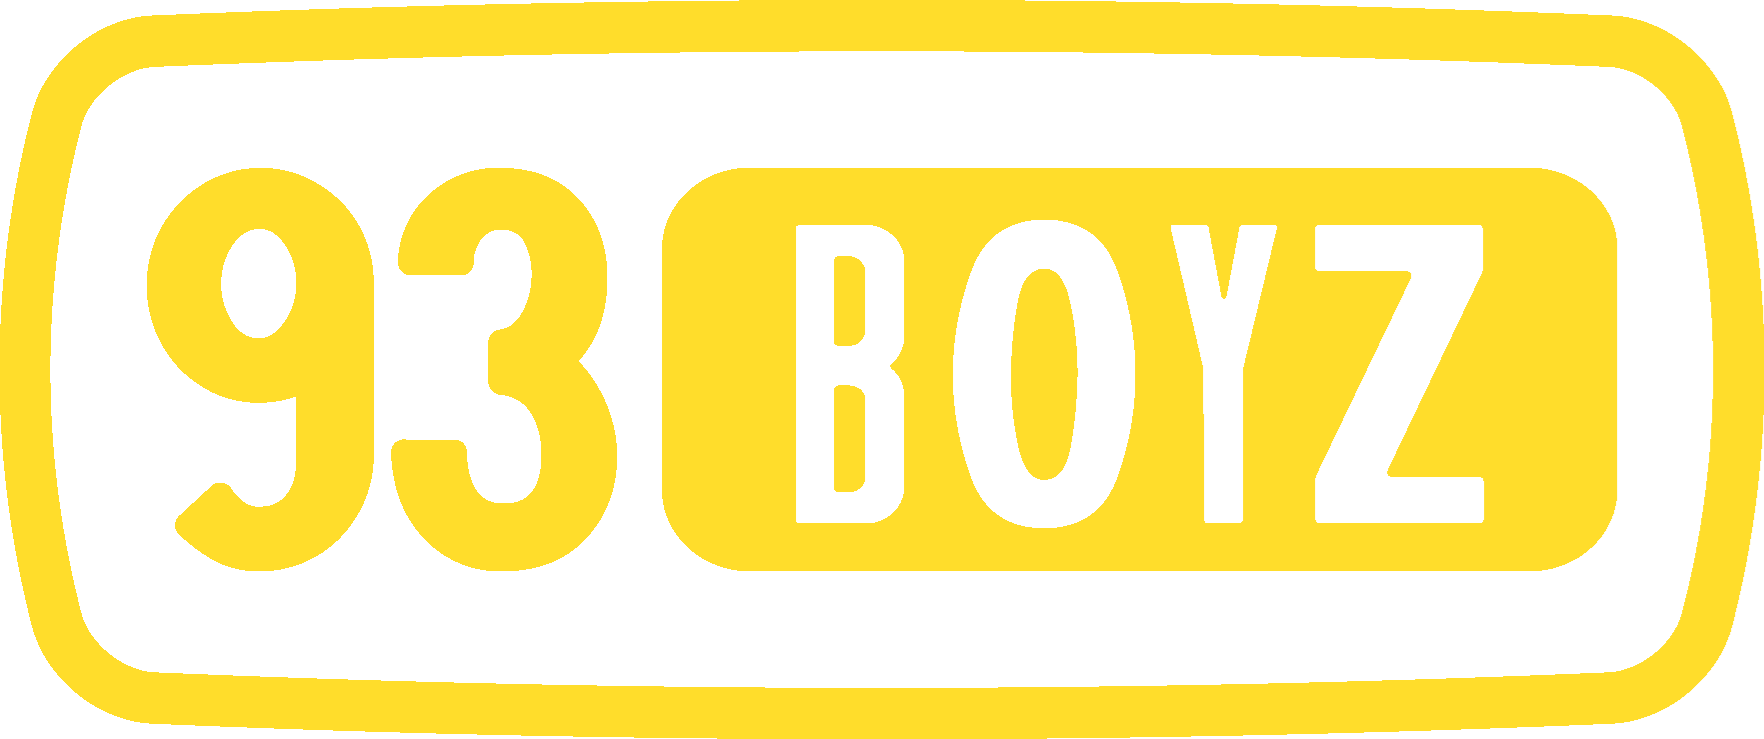 93 Boyz Cannabis Brand Logo